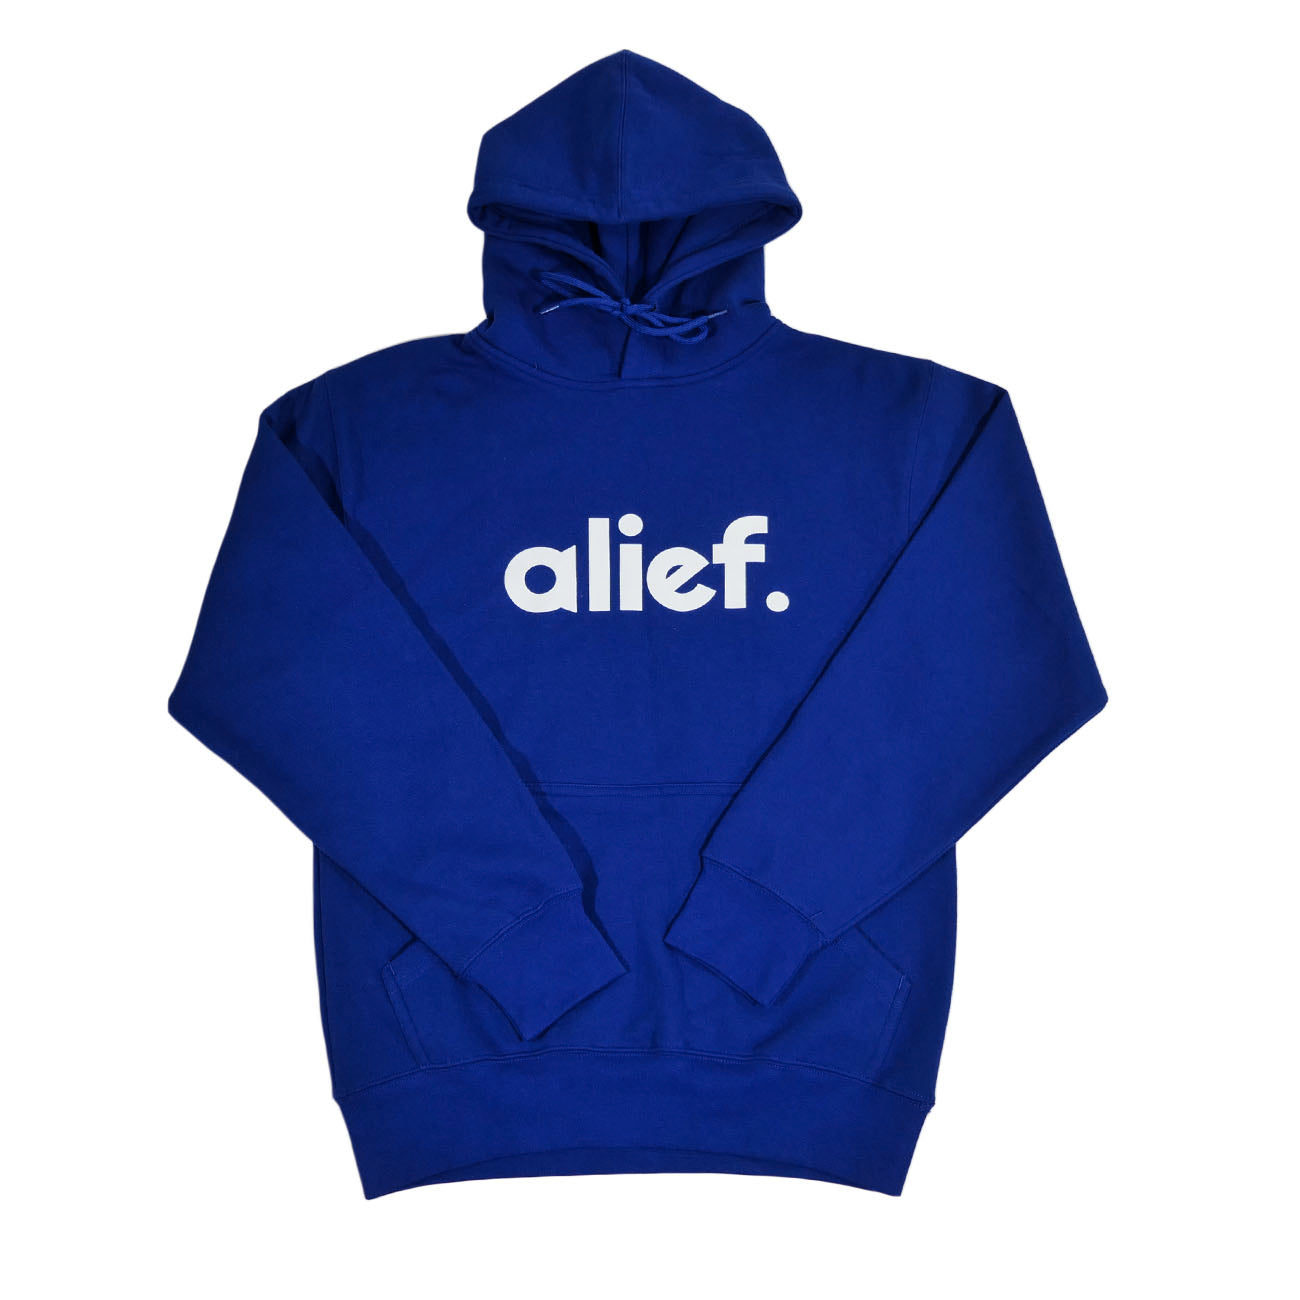 Alief Essential Jumpsuit - Royal Blue